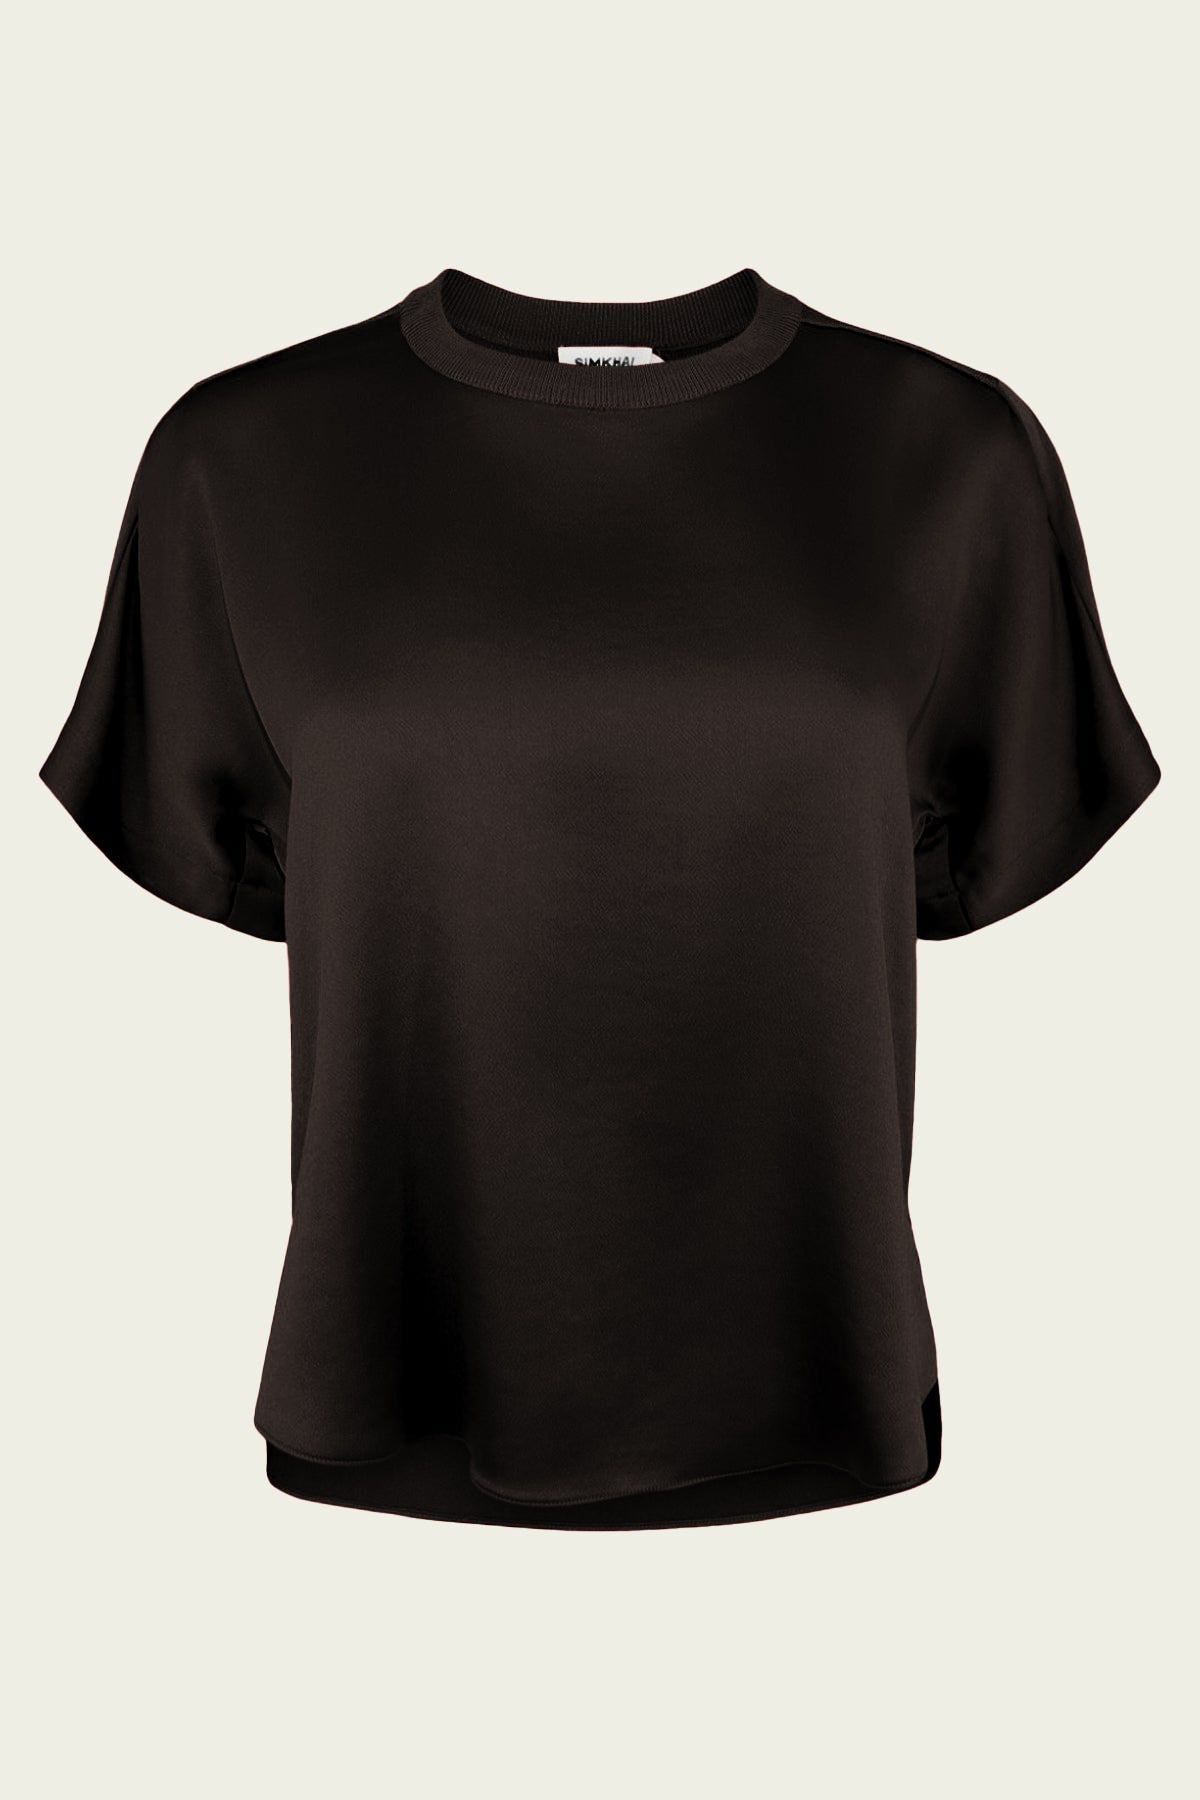 Addy T-Shirt in Black - shop-olivia.com